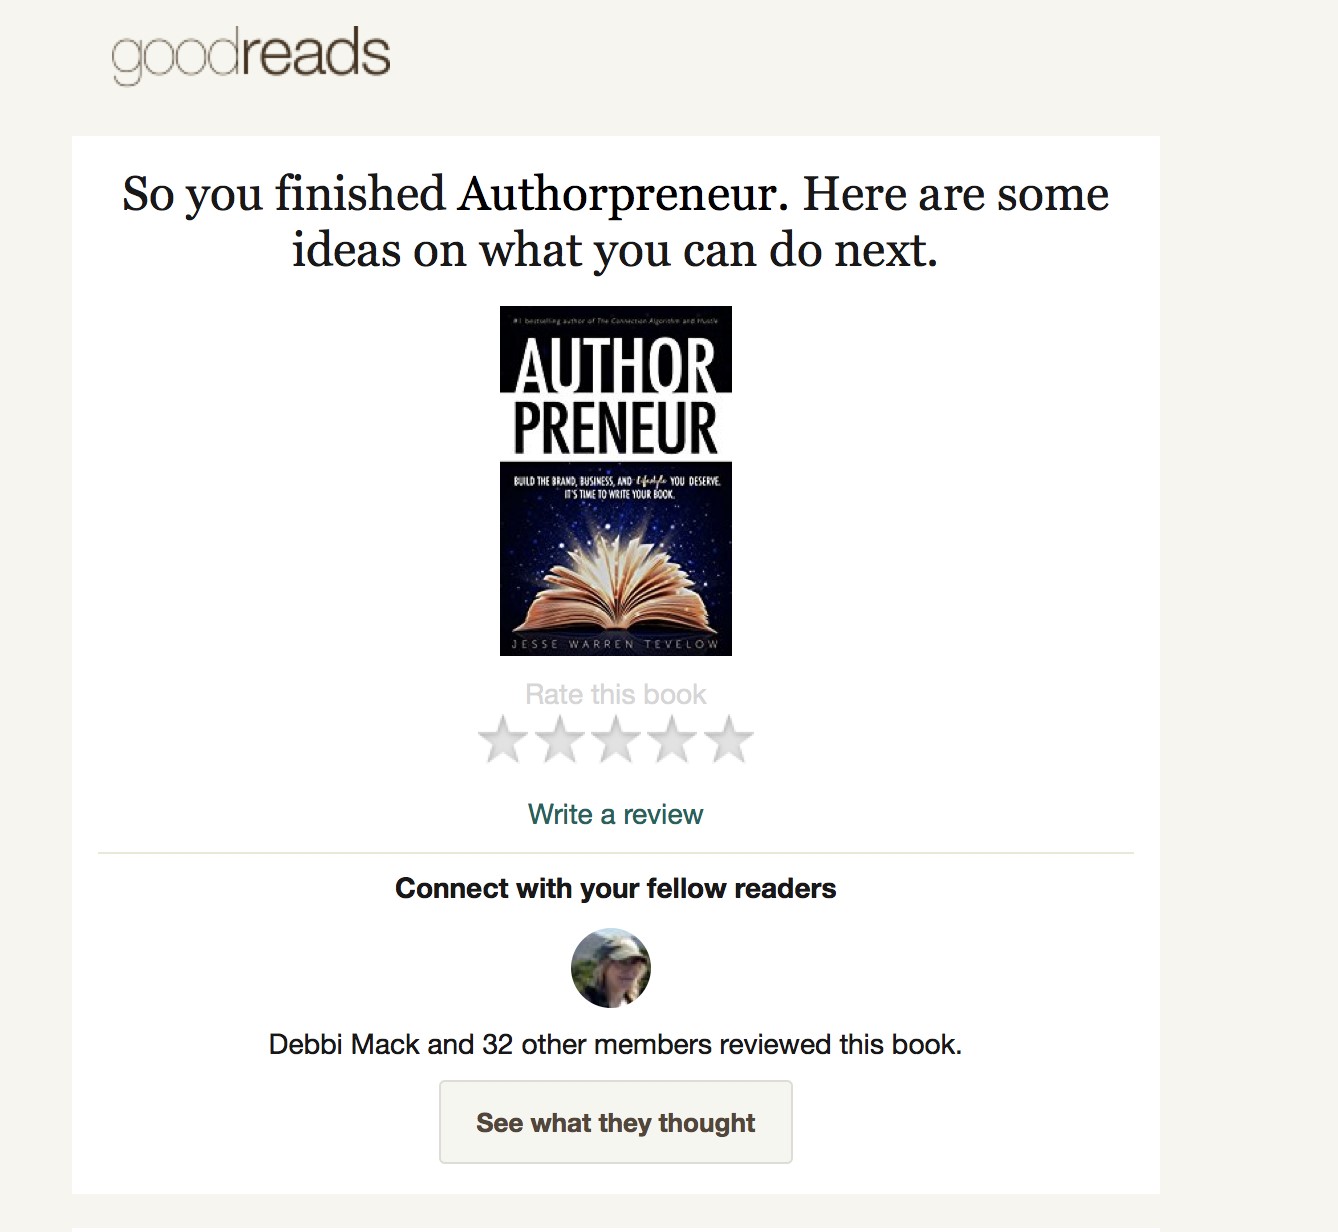 9 Things Amazon Secretly Launched (Goodreads) | AMarketingExpert.com